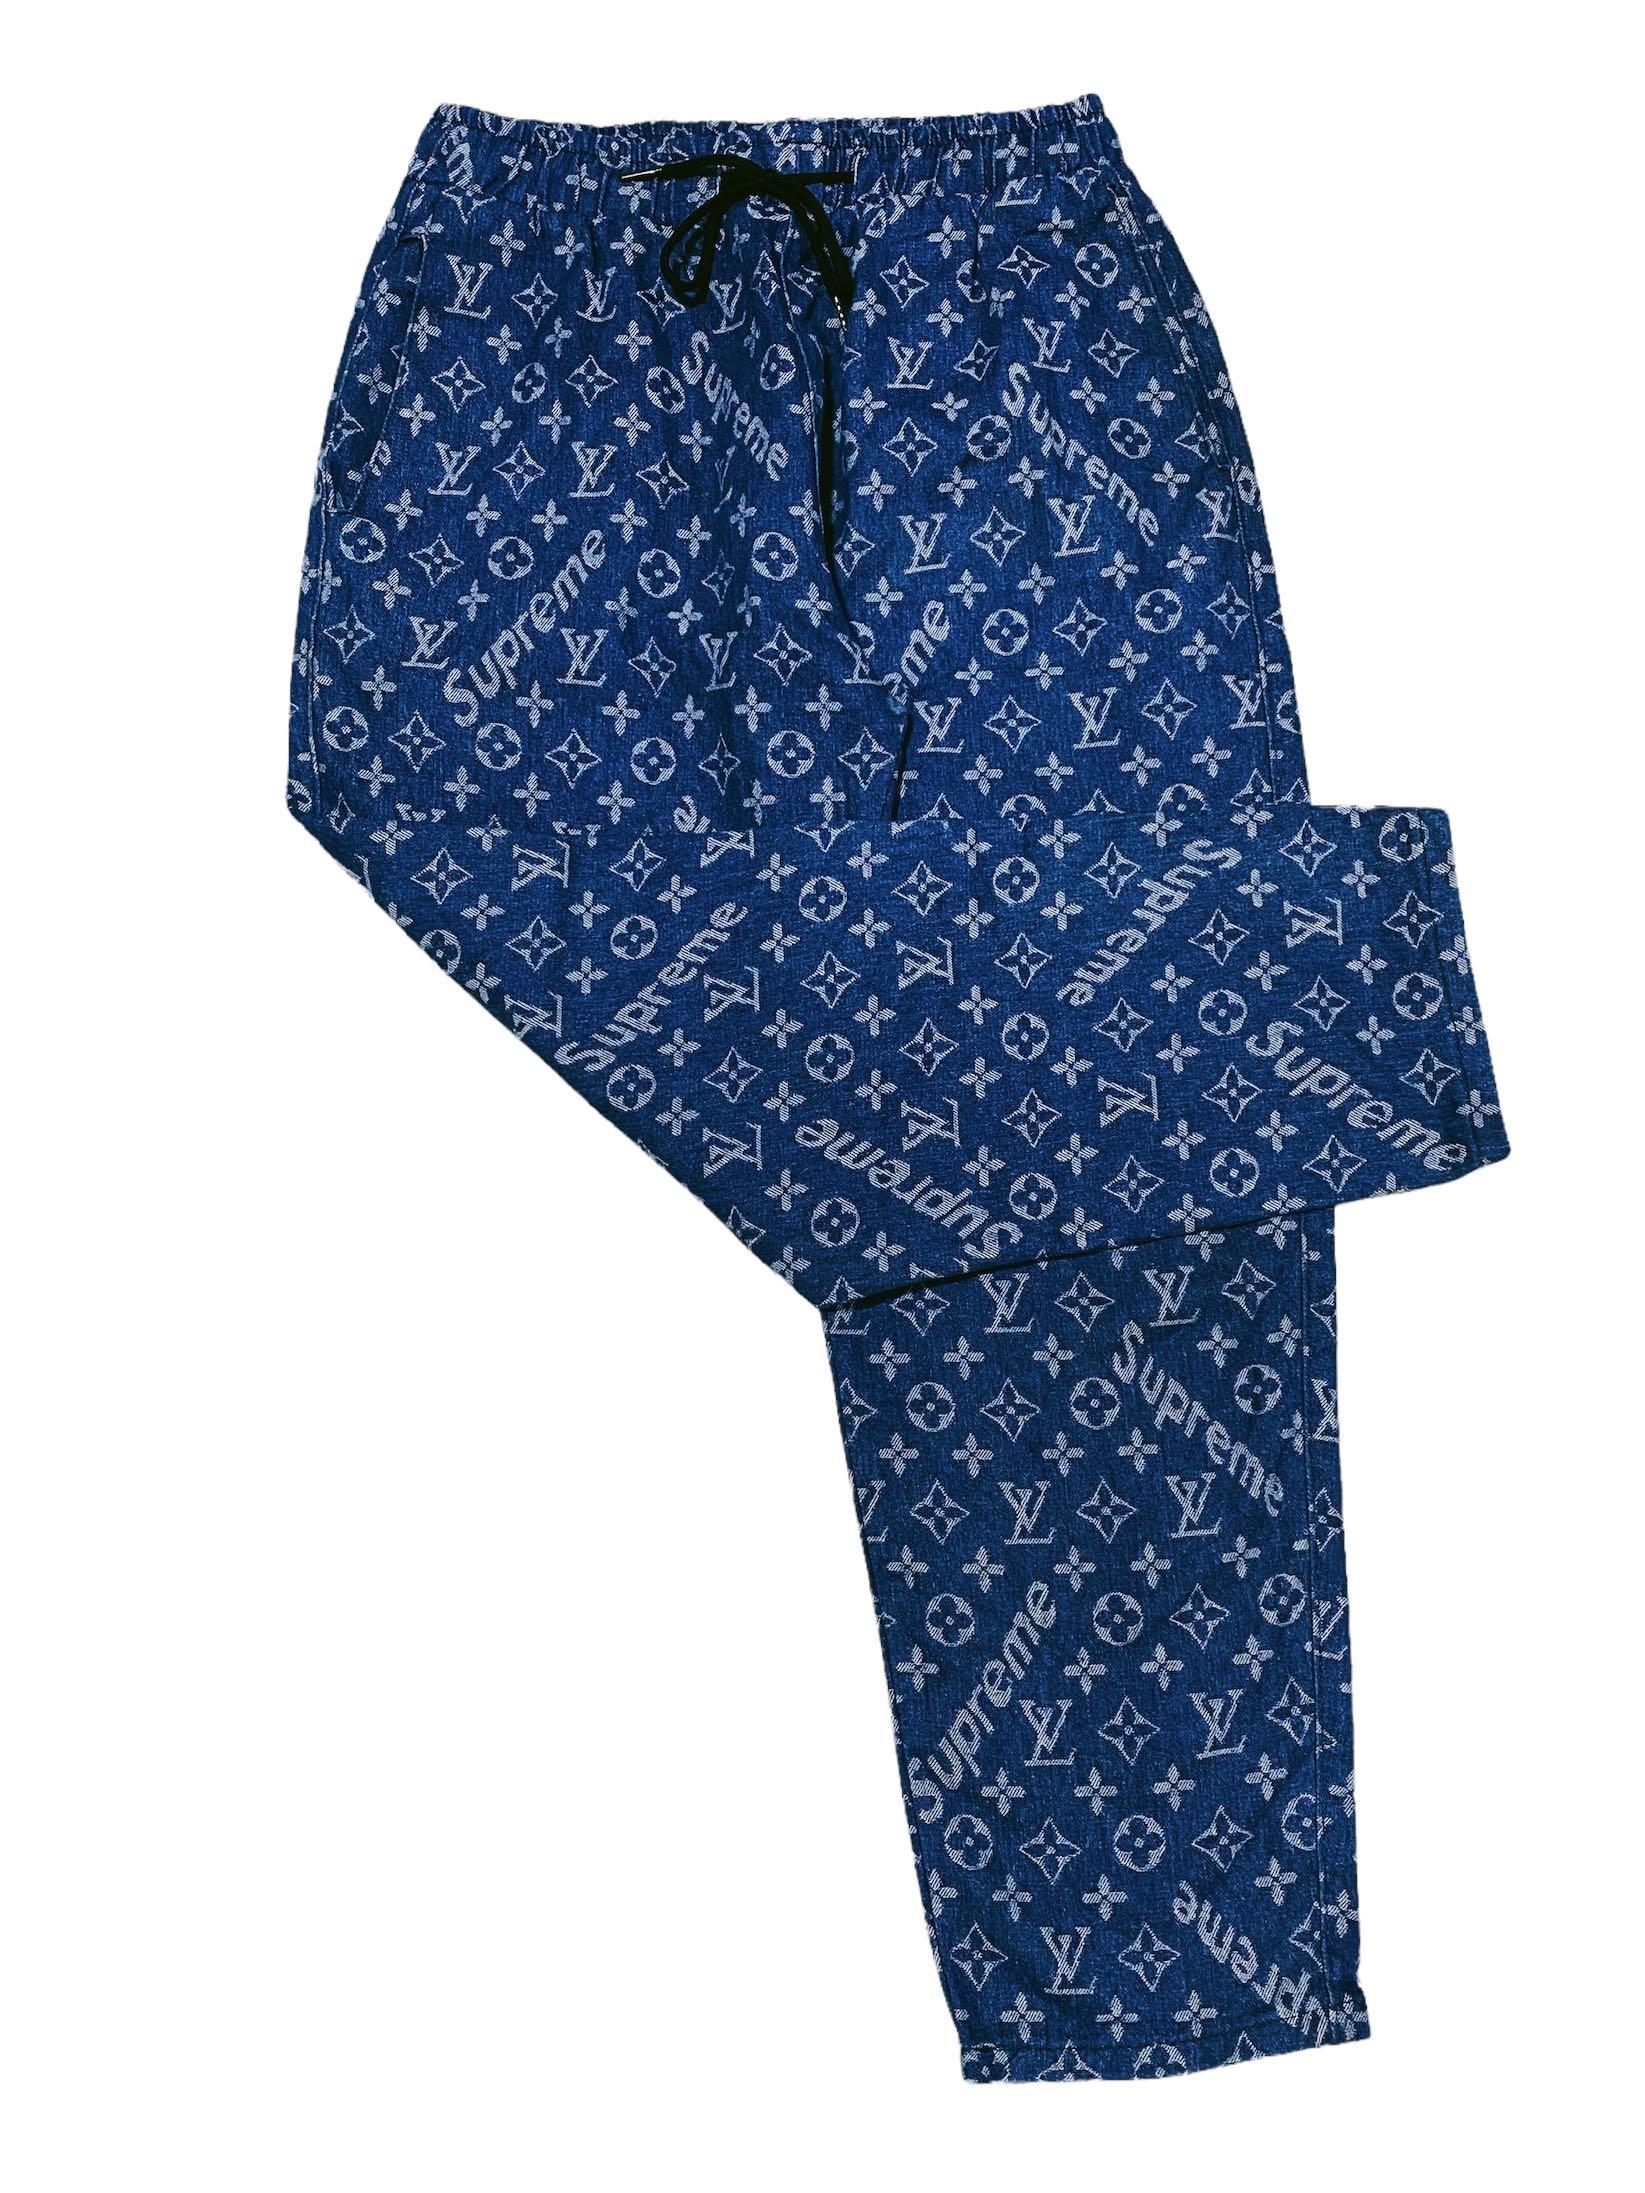 Louis Vuitton x Supreme Blue Monogram Jacquard Denim Jeans 3XL